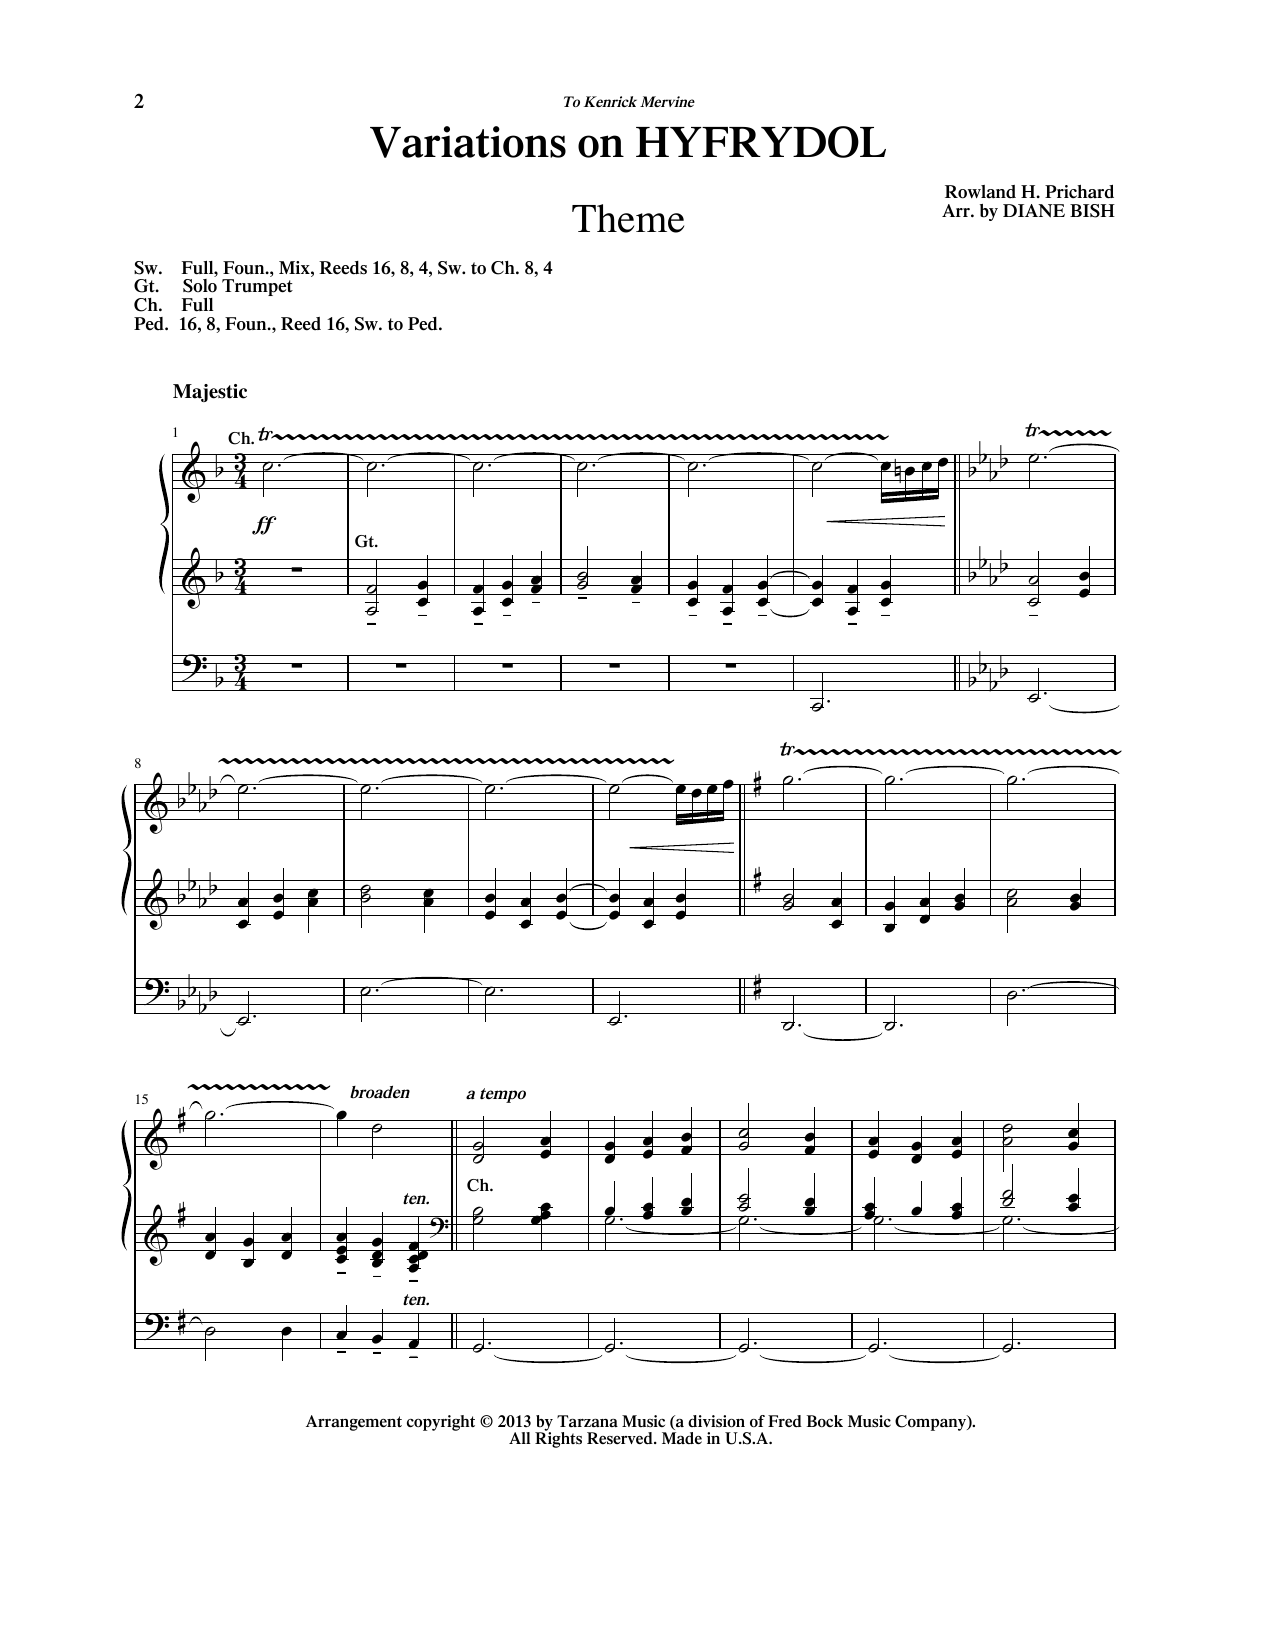 Rowland H. Prichard Variations on Hyfrydol (arr. Diane Bish) Sheet Music Notes & Chords for Organ - Download or Print PDF